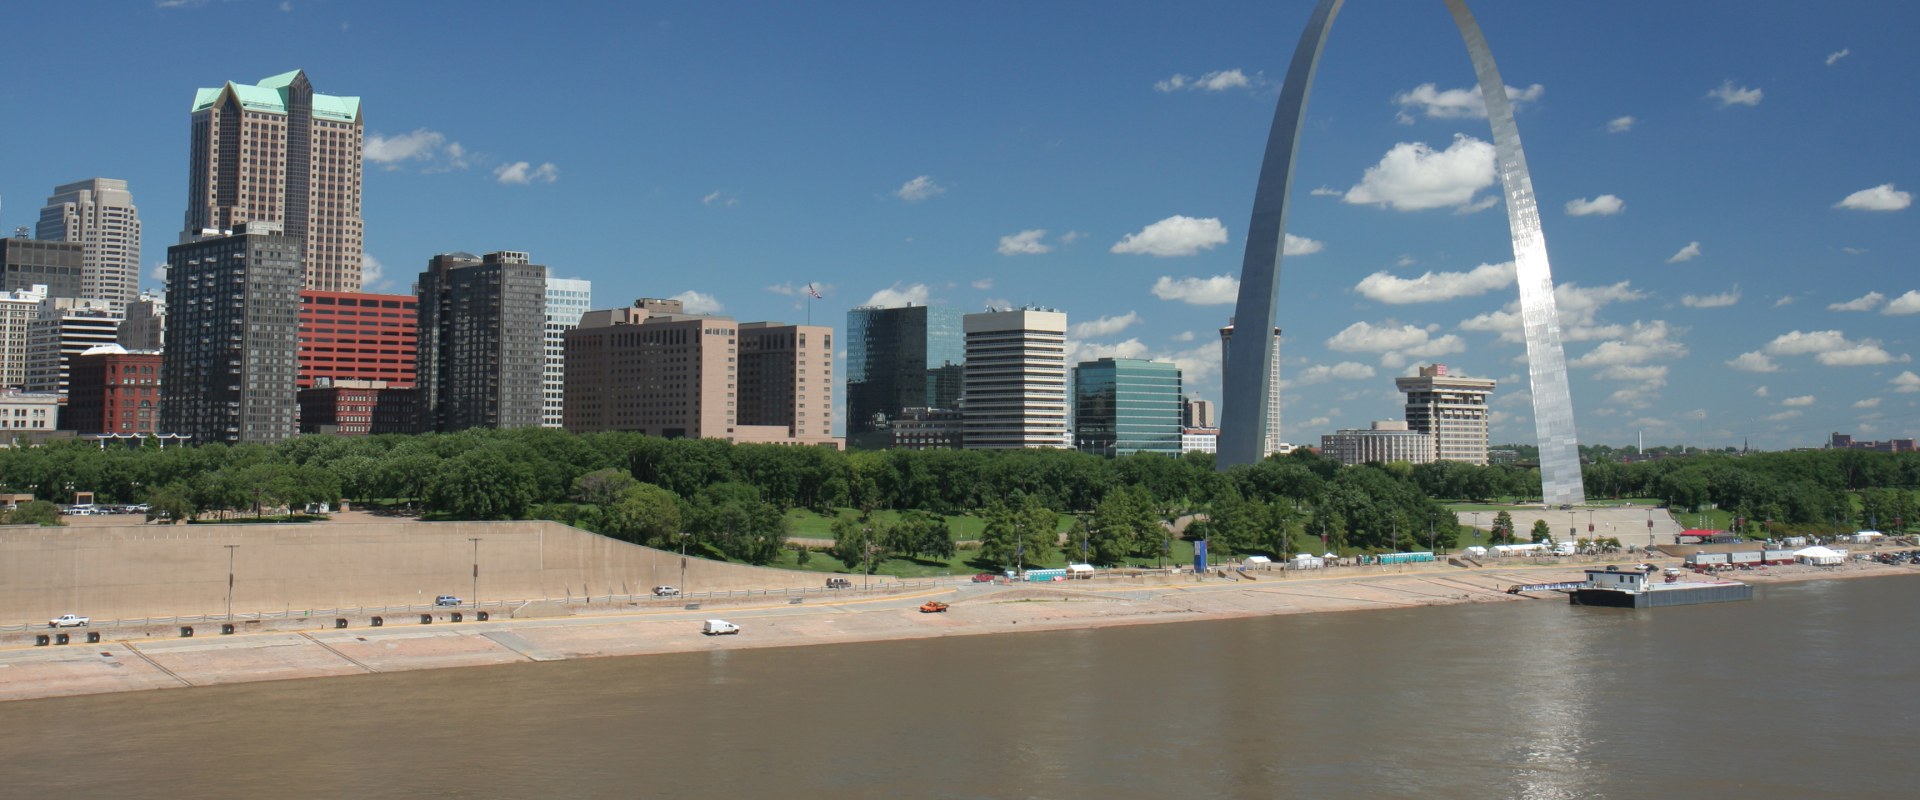 Exploring St. Louis Missouri with MetroLink